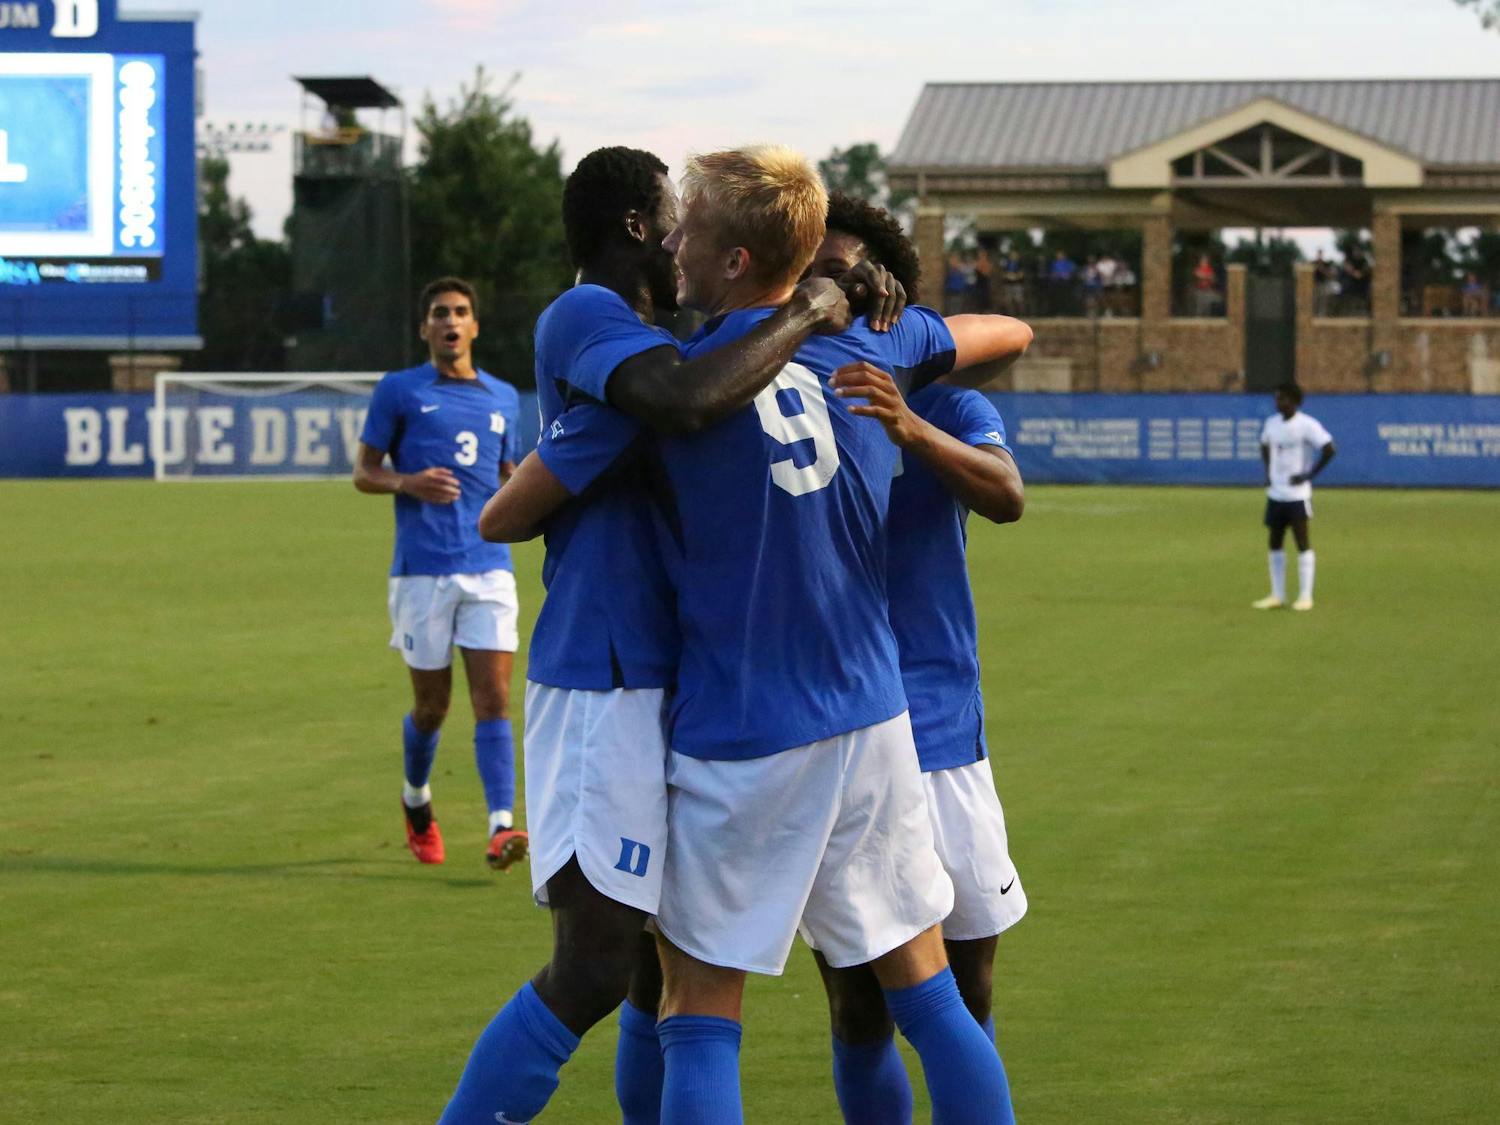 The Blue Devils, including Ulfur Bjornsson and Forster Ajago, embrace to celebrate Duke's 2-0 win against Virginia.